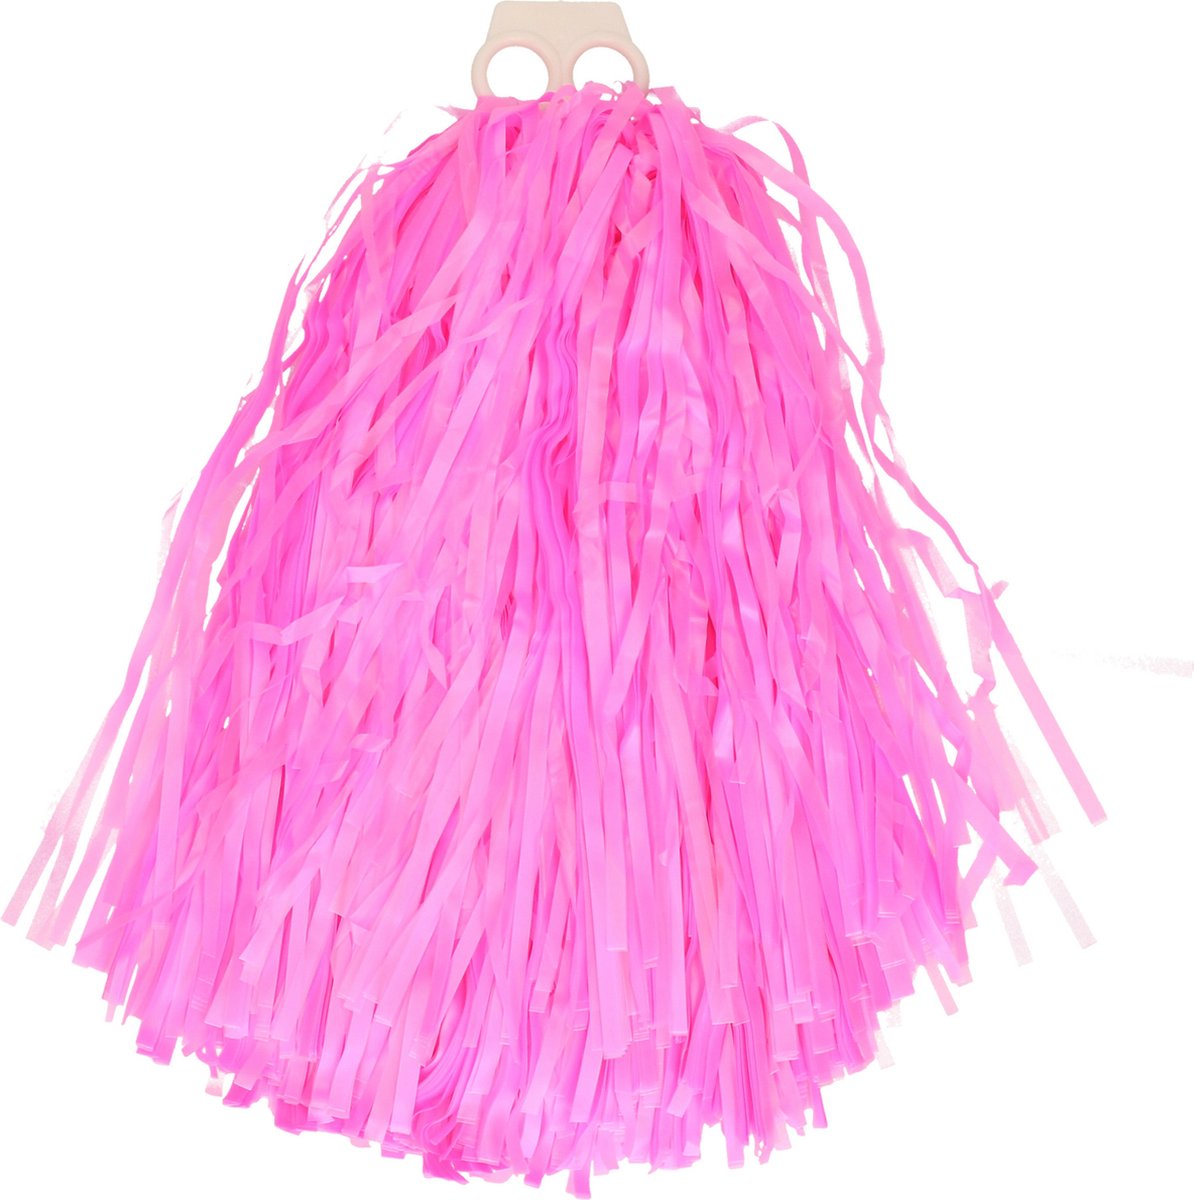 Cheerballs/pompoms - 1x - roze - met franjes en ring handgreep - 28 cm